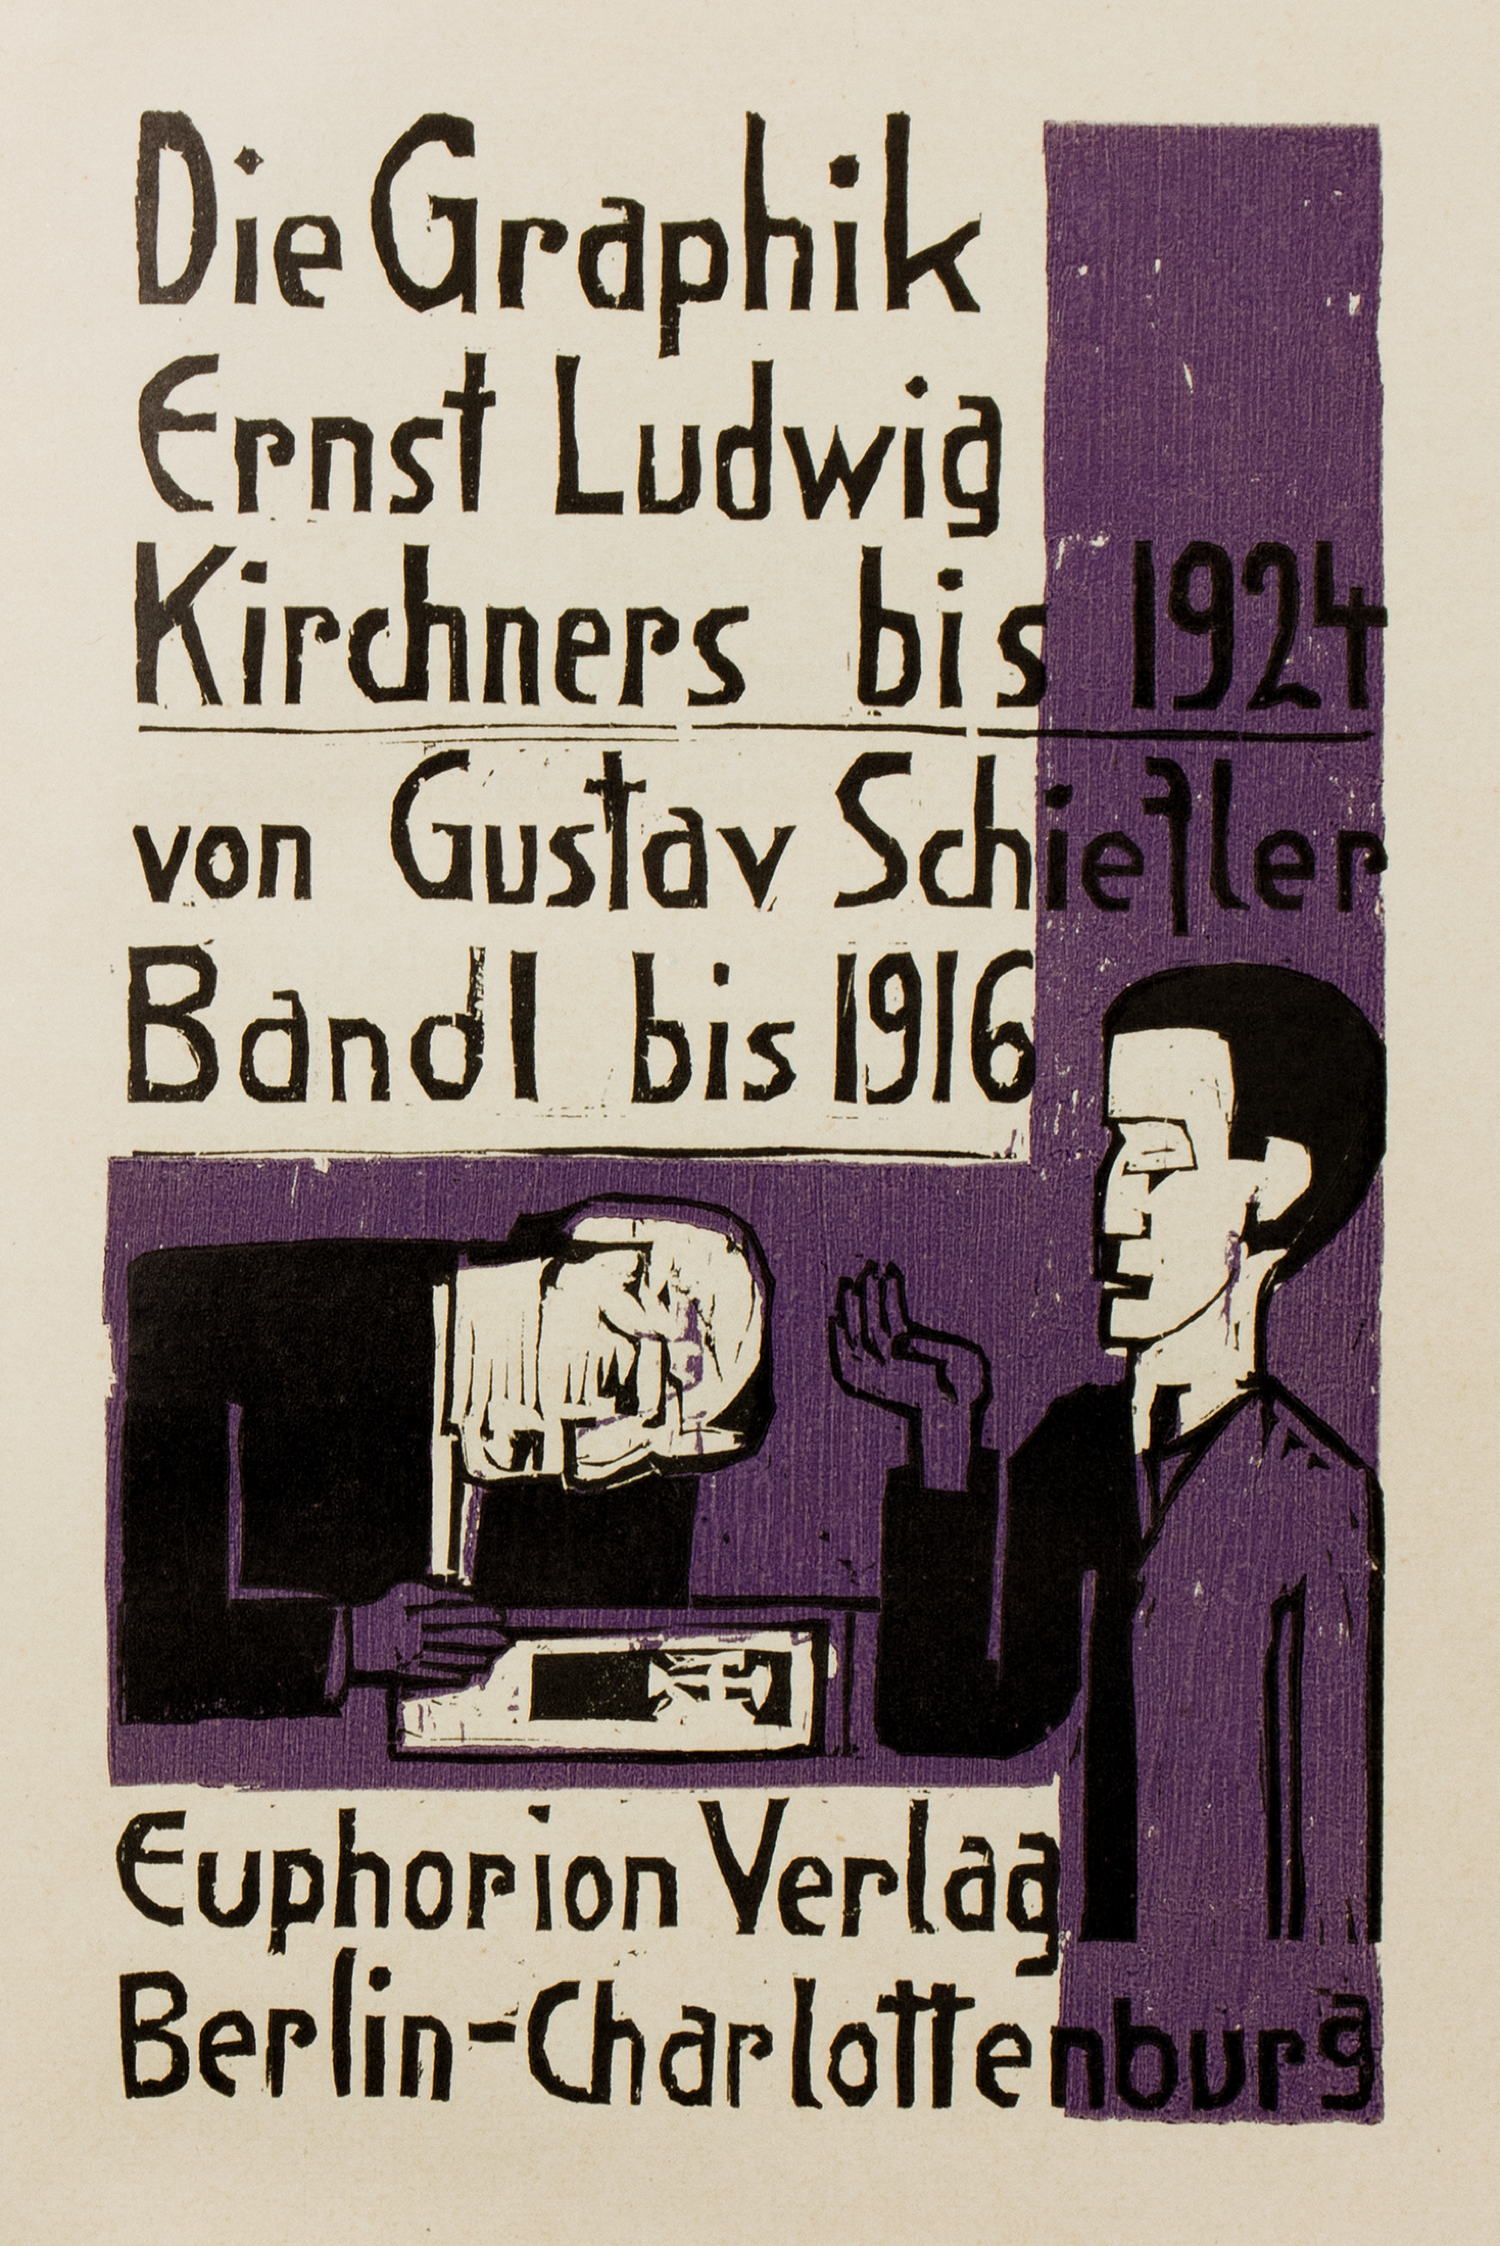 Ernst Ludwig Kirchner - Gustav Schiefler. Die Graphik Ernst Ludwig Kirchners bis 1924. - Image 2 of 12